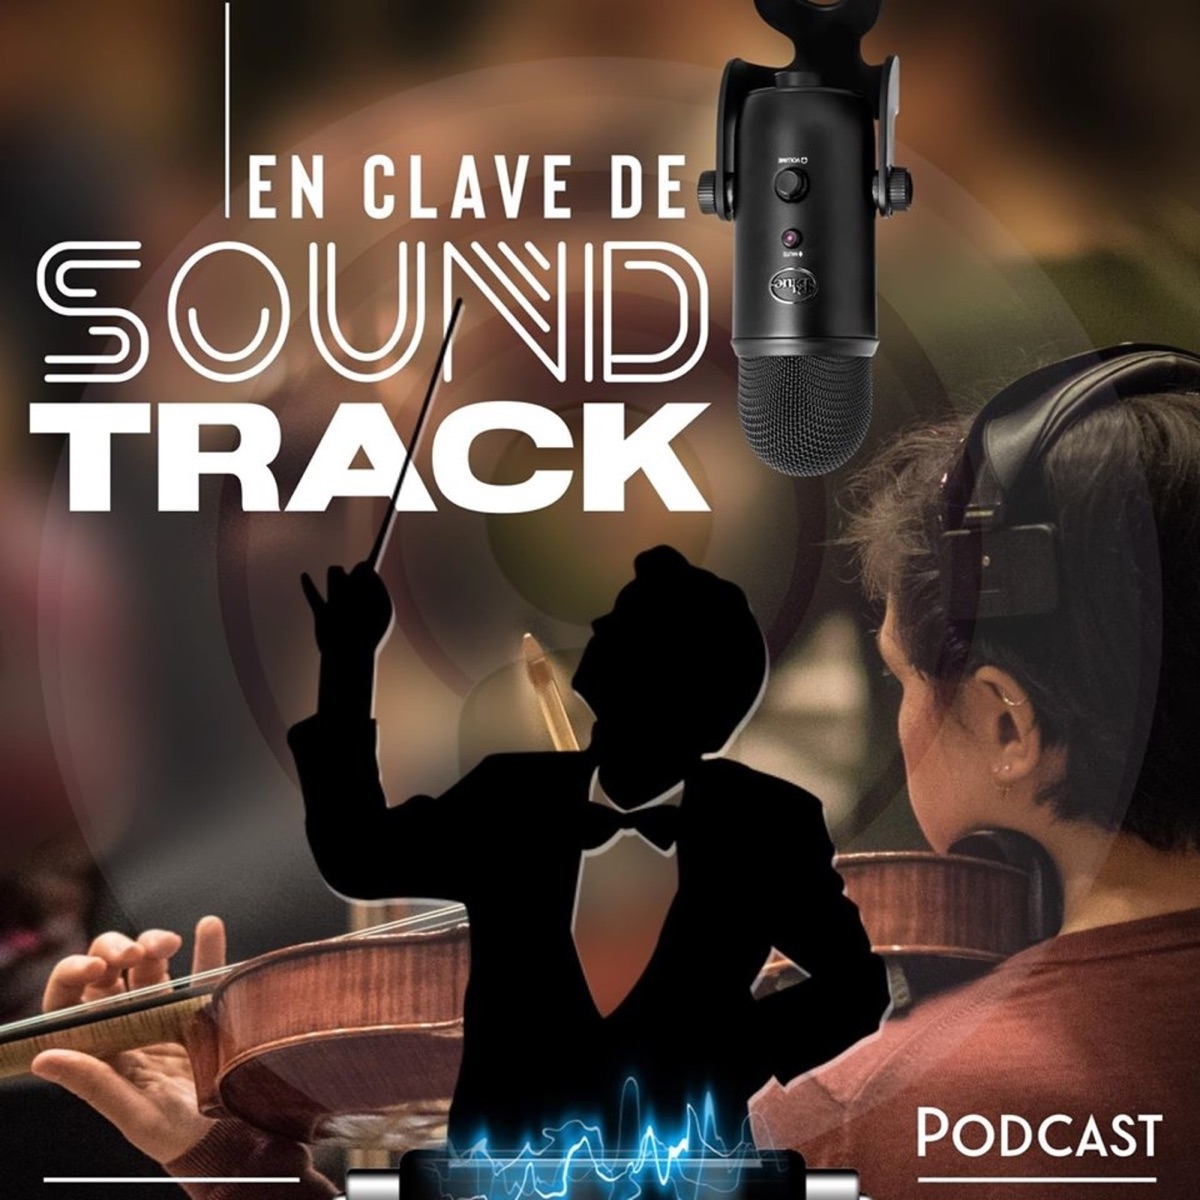 Acurrucarse Reina Todo el mundo En Clave de Soundtrack – Podcast – Podtail